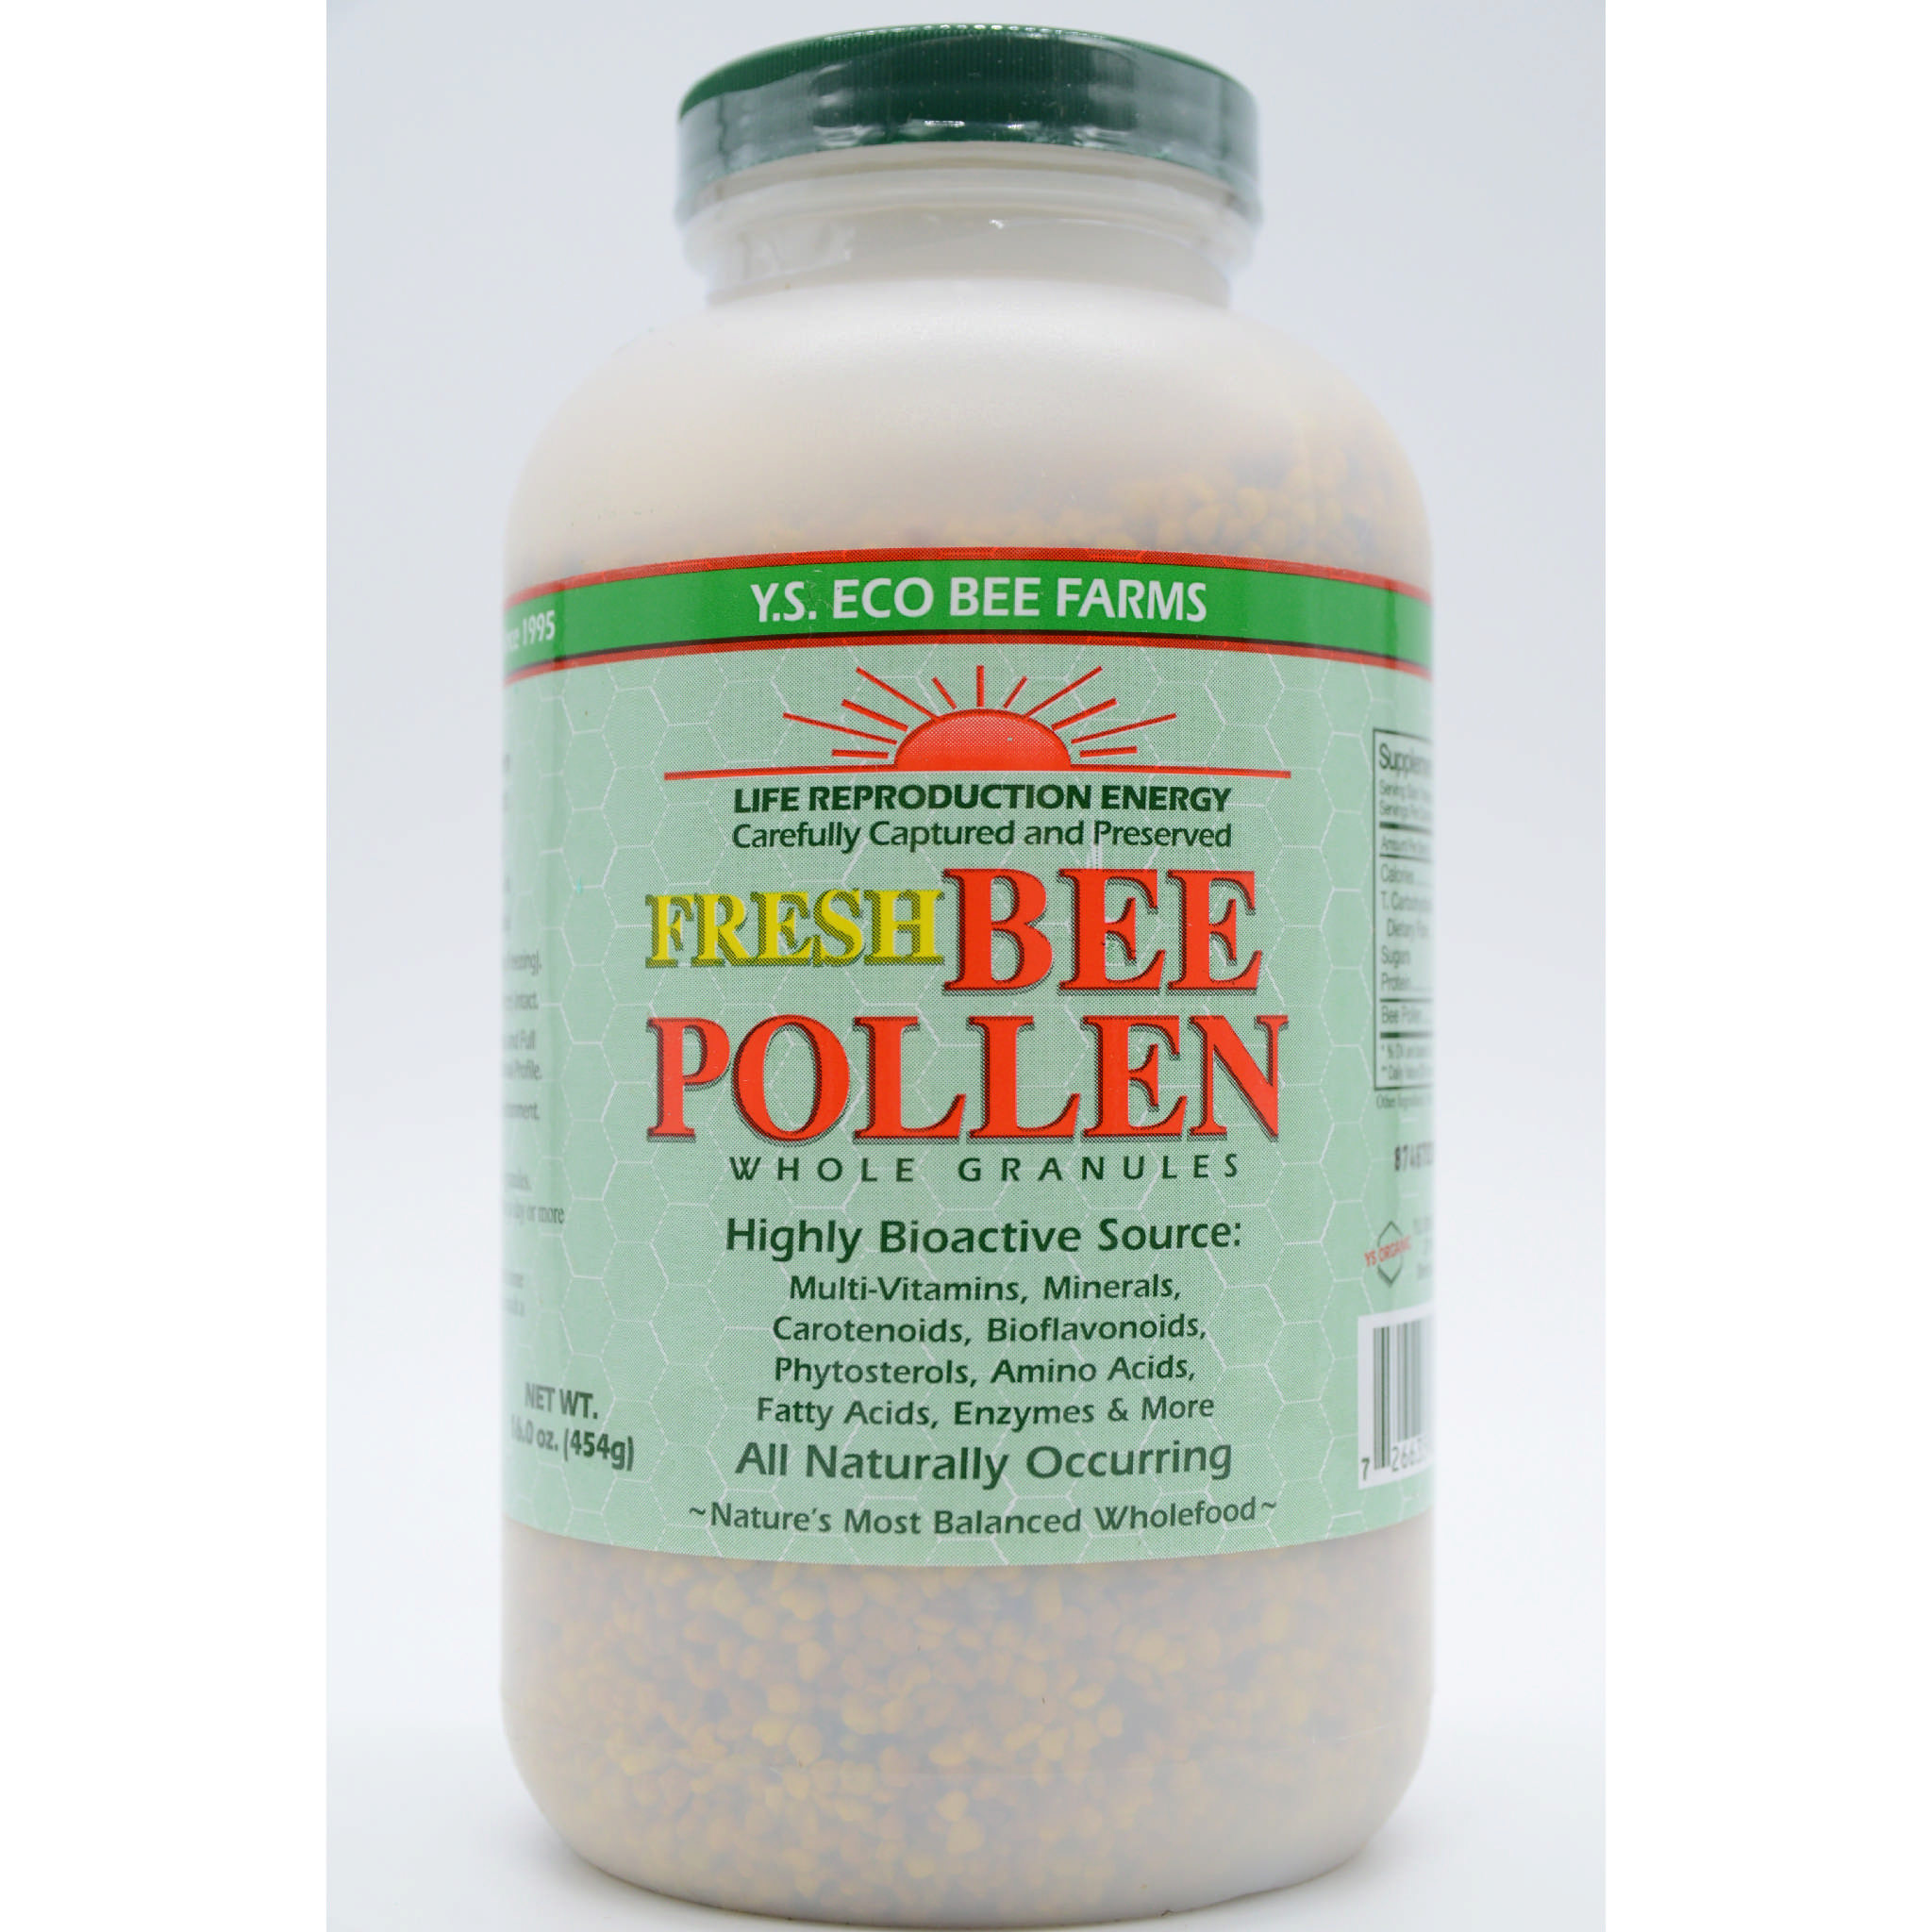 Y S Organic Bee Farm - Bee Pollen Whole Granules